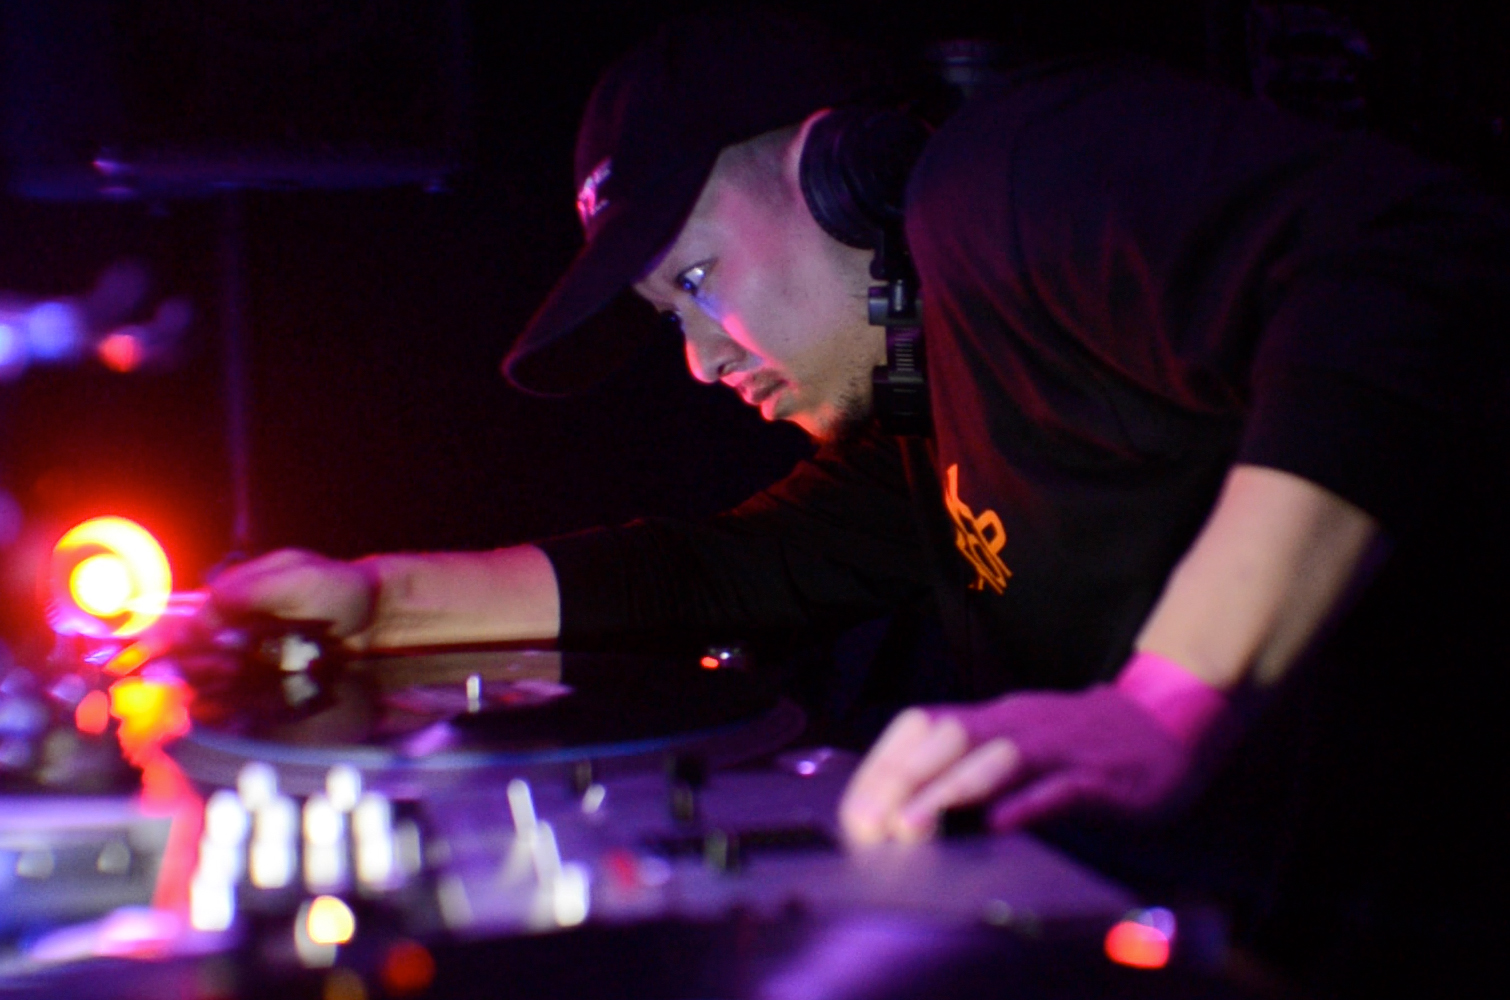 DJ MISTA SHAR “THE EXPERIENCE” RELEASE PARTY at Club F.A.P Shonan recap